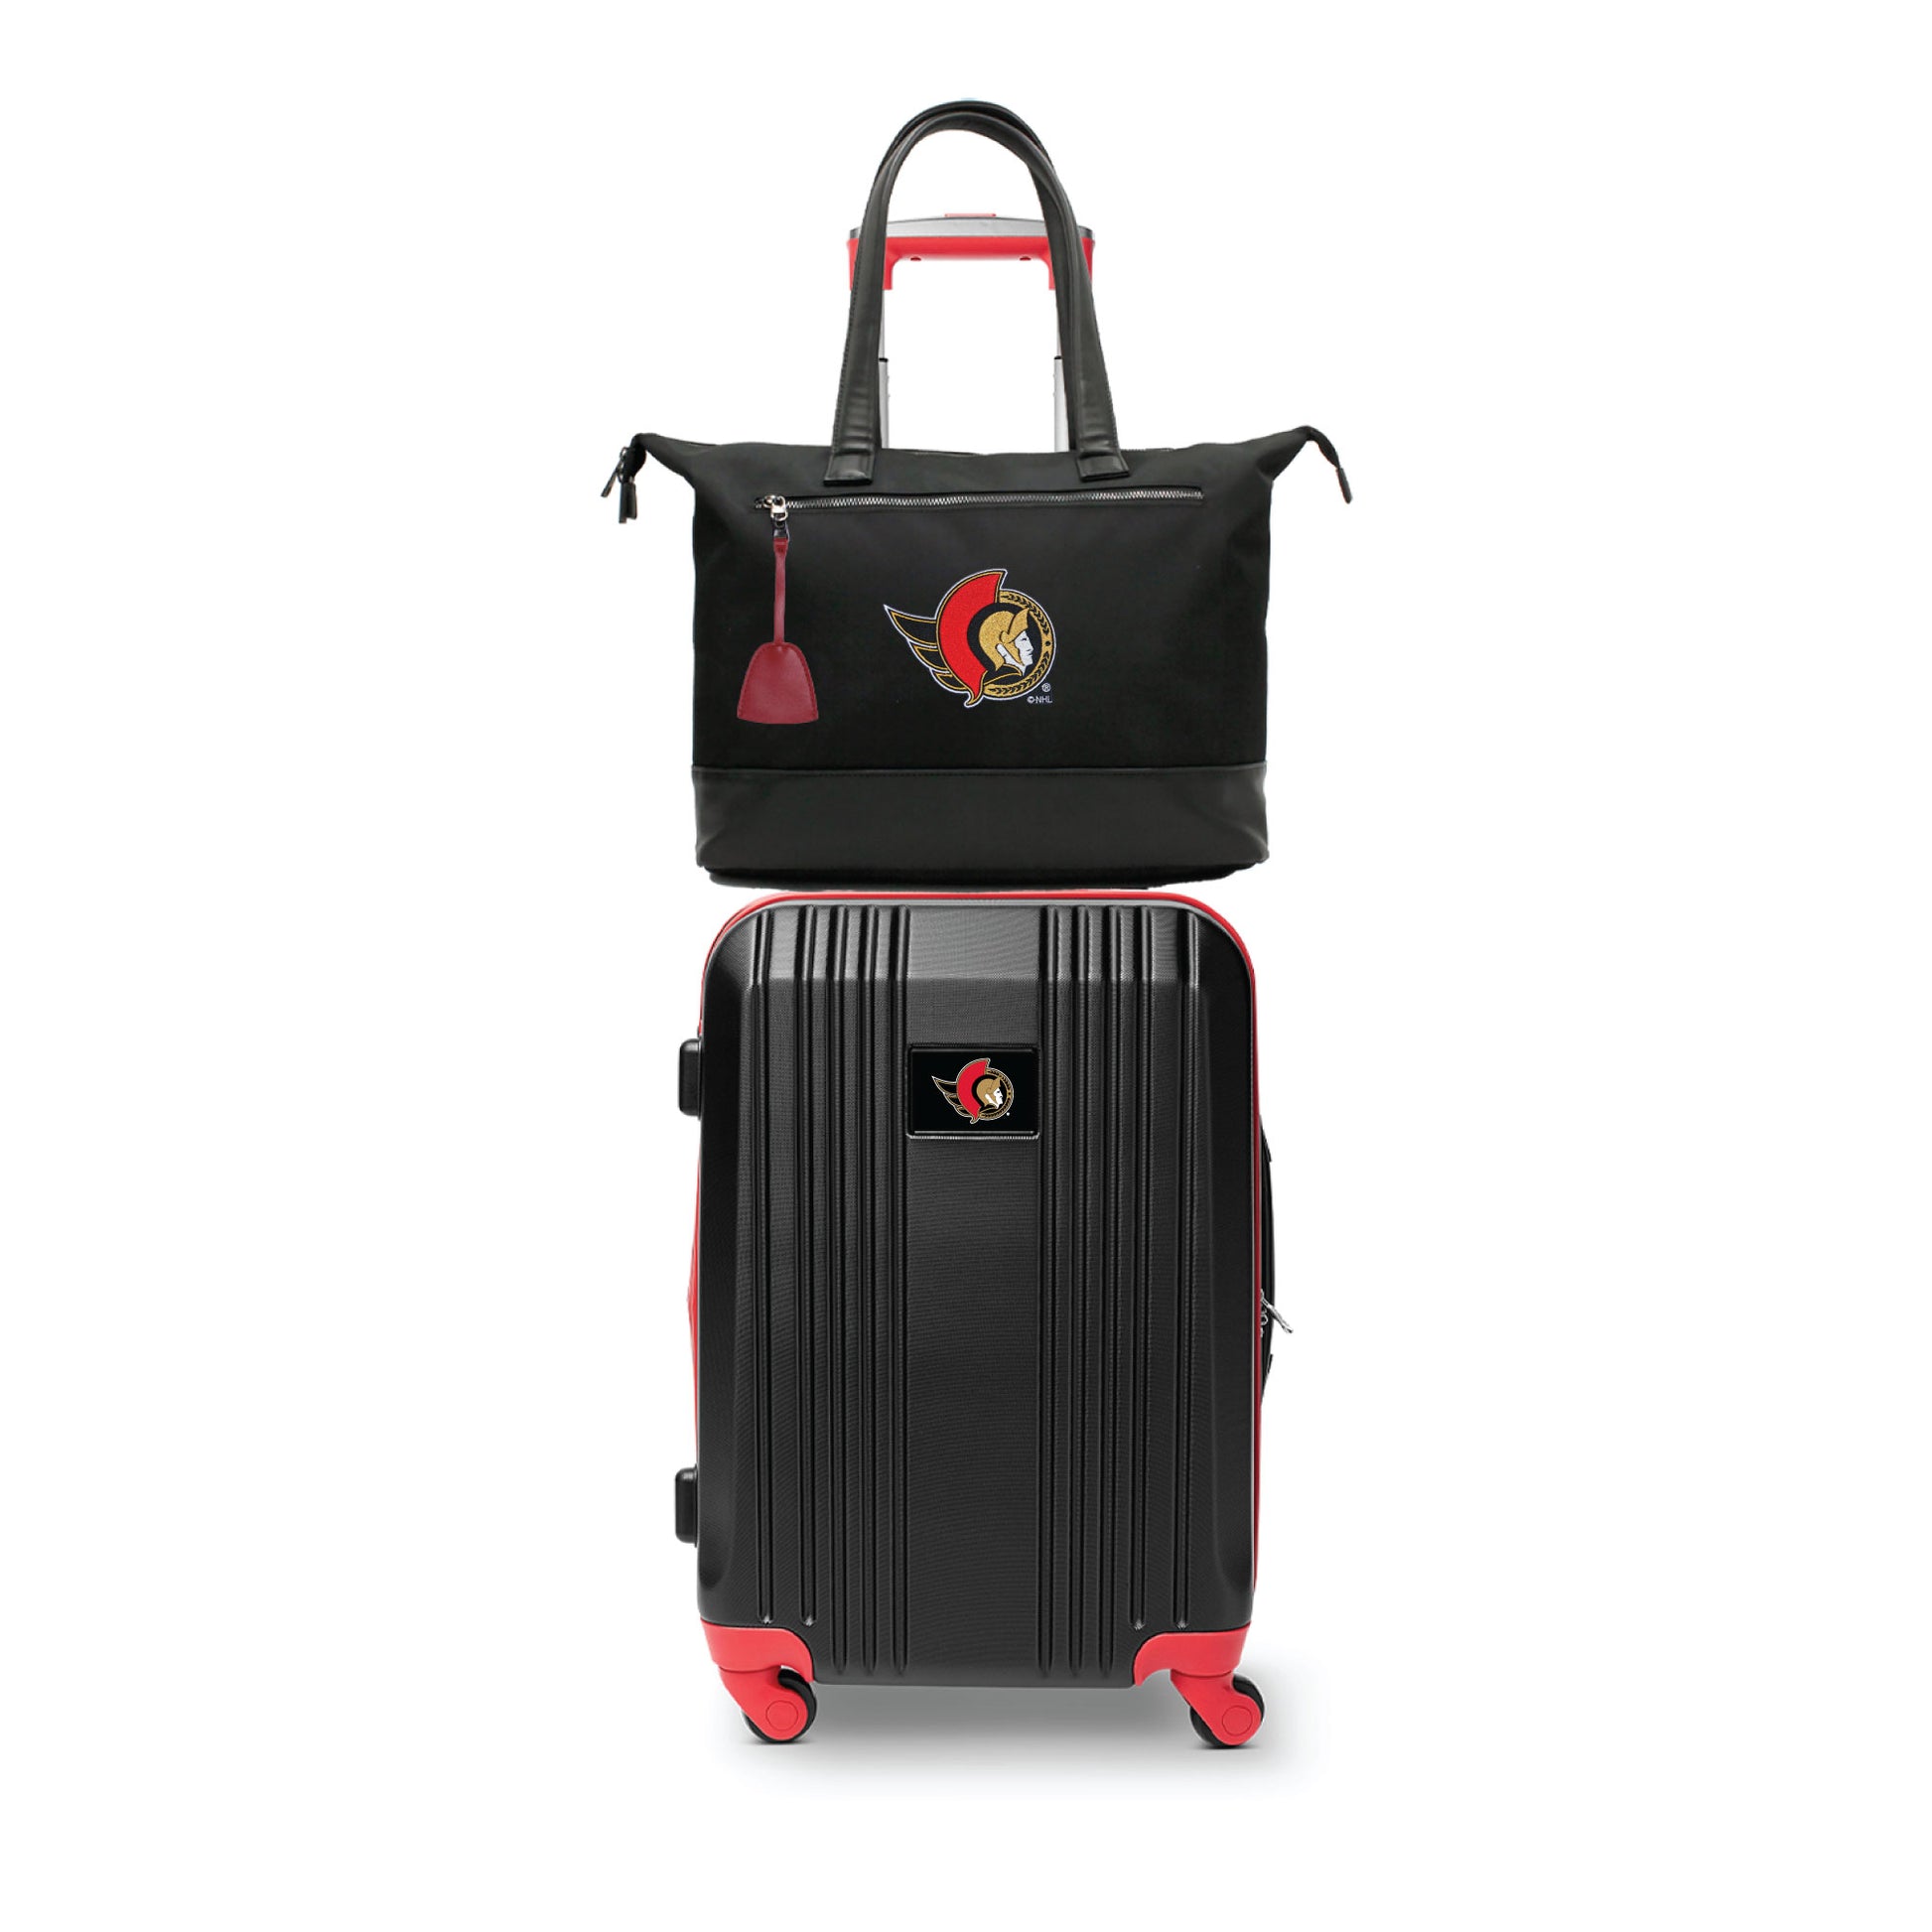 Ottawa Senators Premium Laptop Tote Bag and Luggage Set